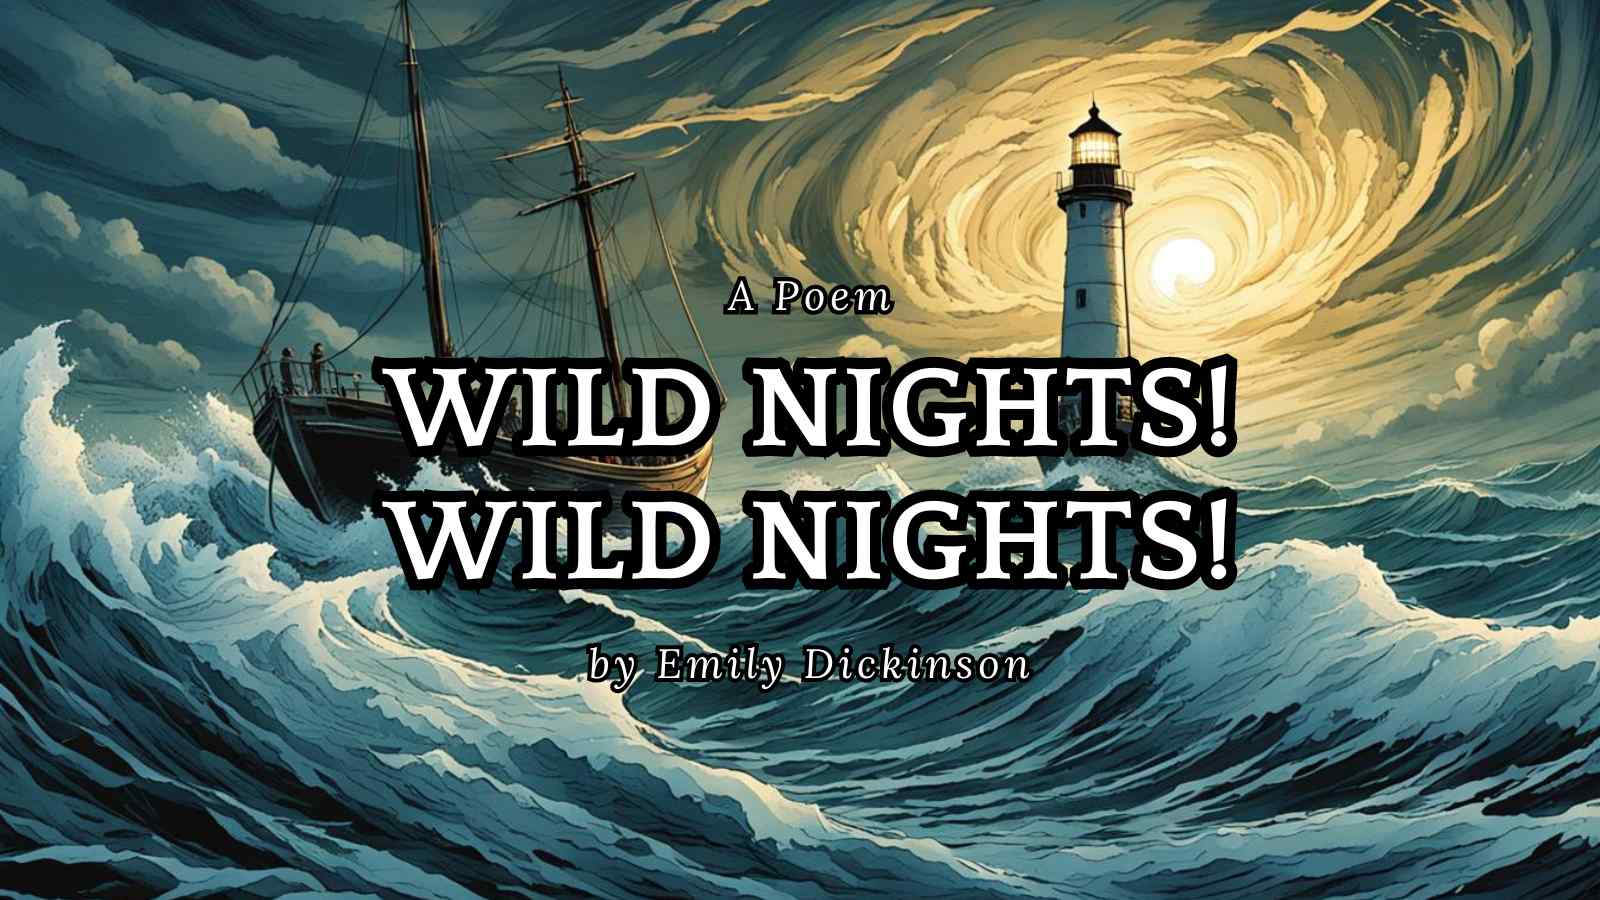 Wild nights! Wild nights! by Emily Dickinson